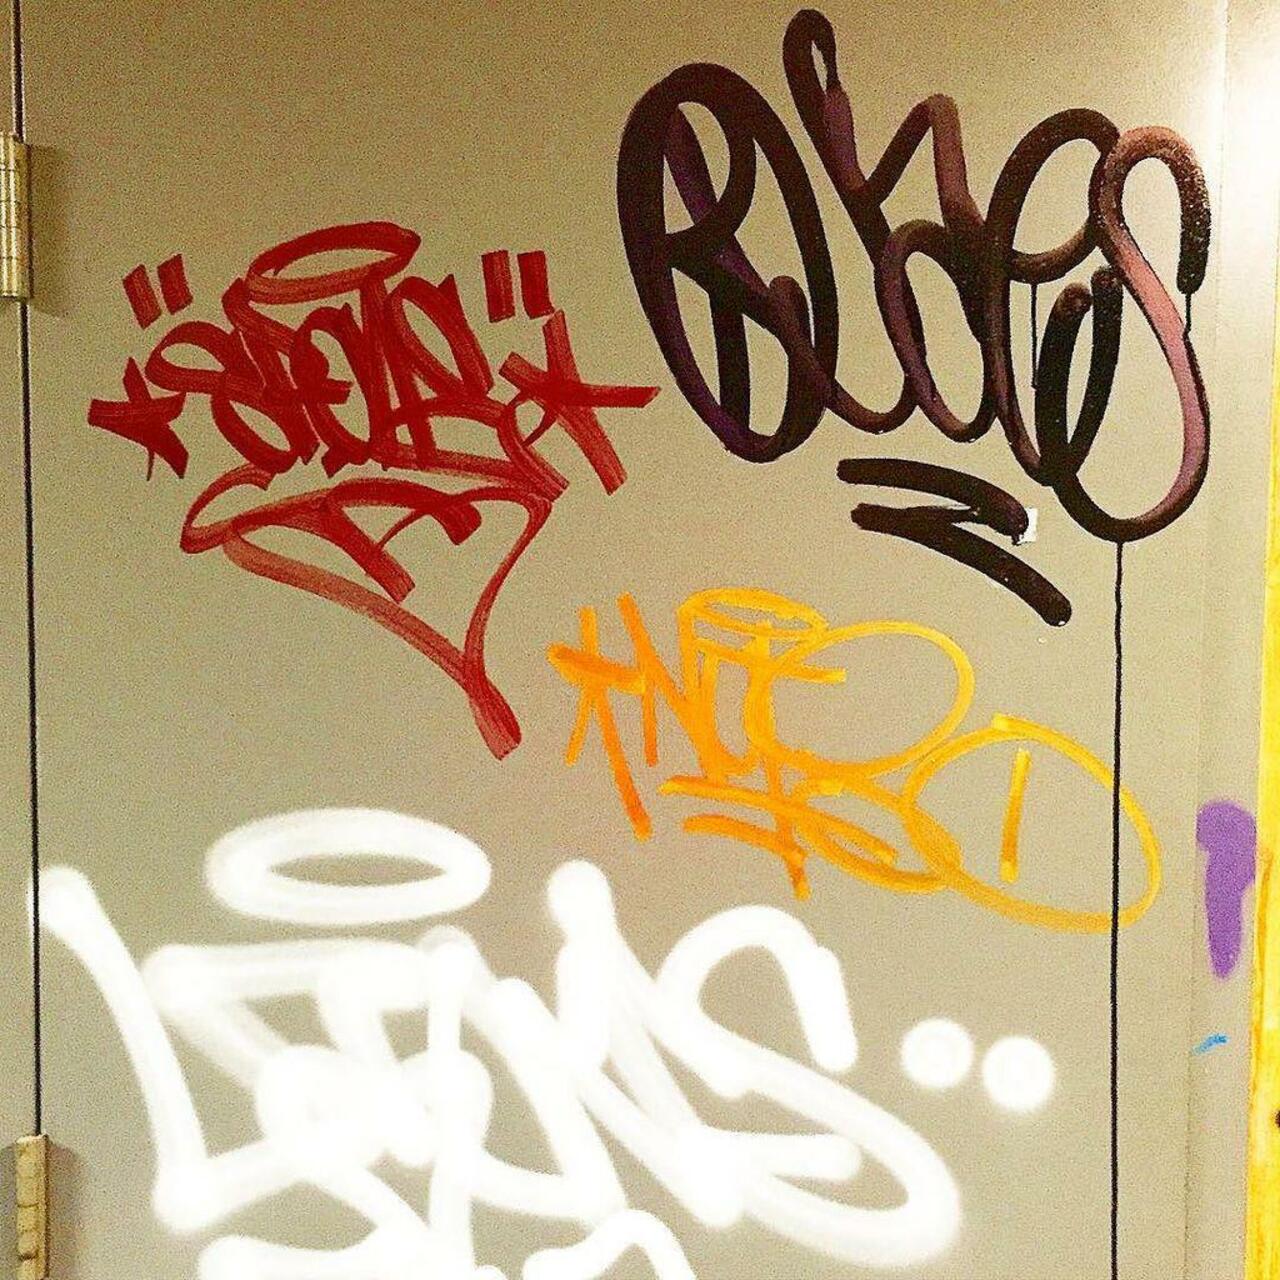 RT @artpushr: via #ojae1fyc "http://bit.ly/1MOqWdW" #graffiti #streetart http://t.co/7SBrW35QUi